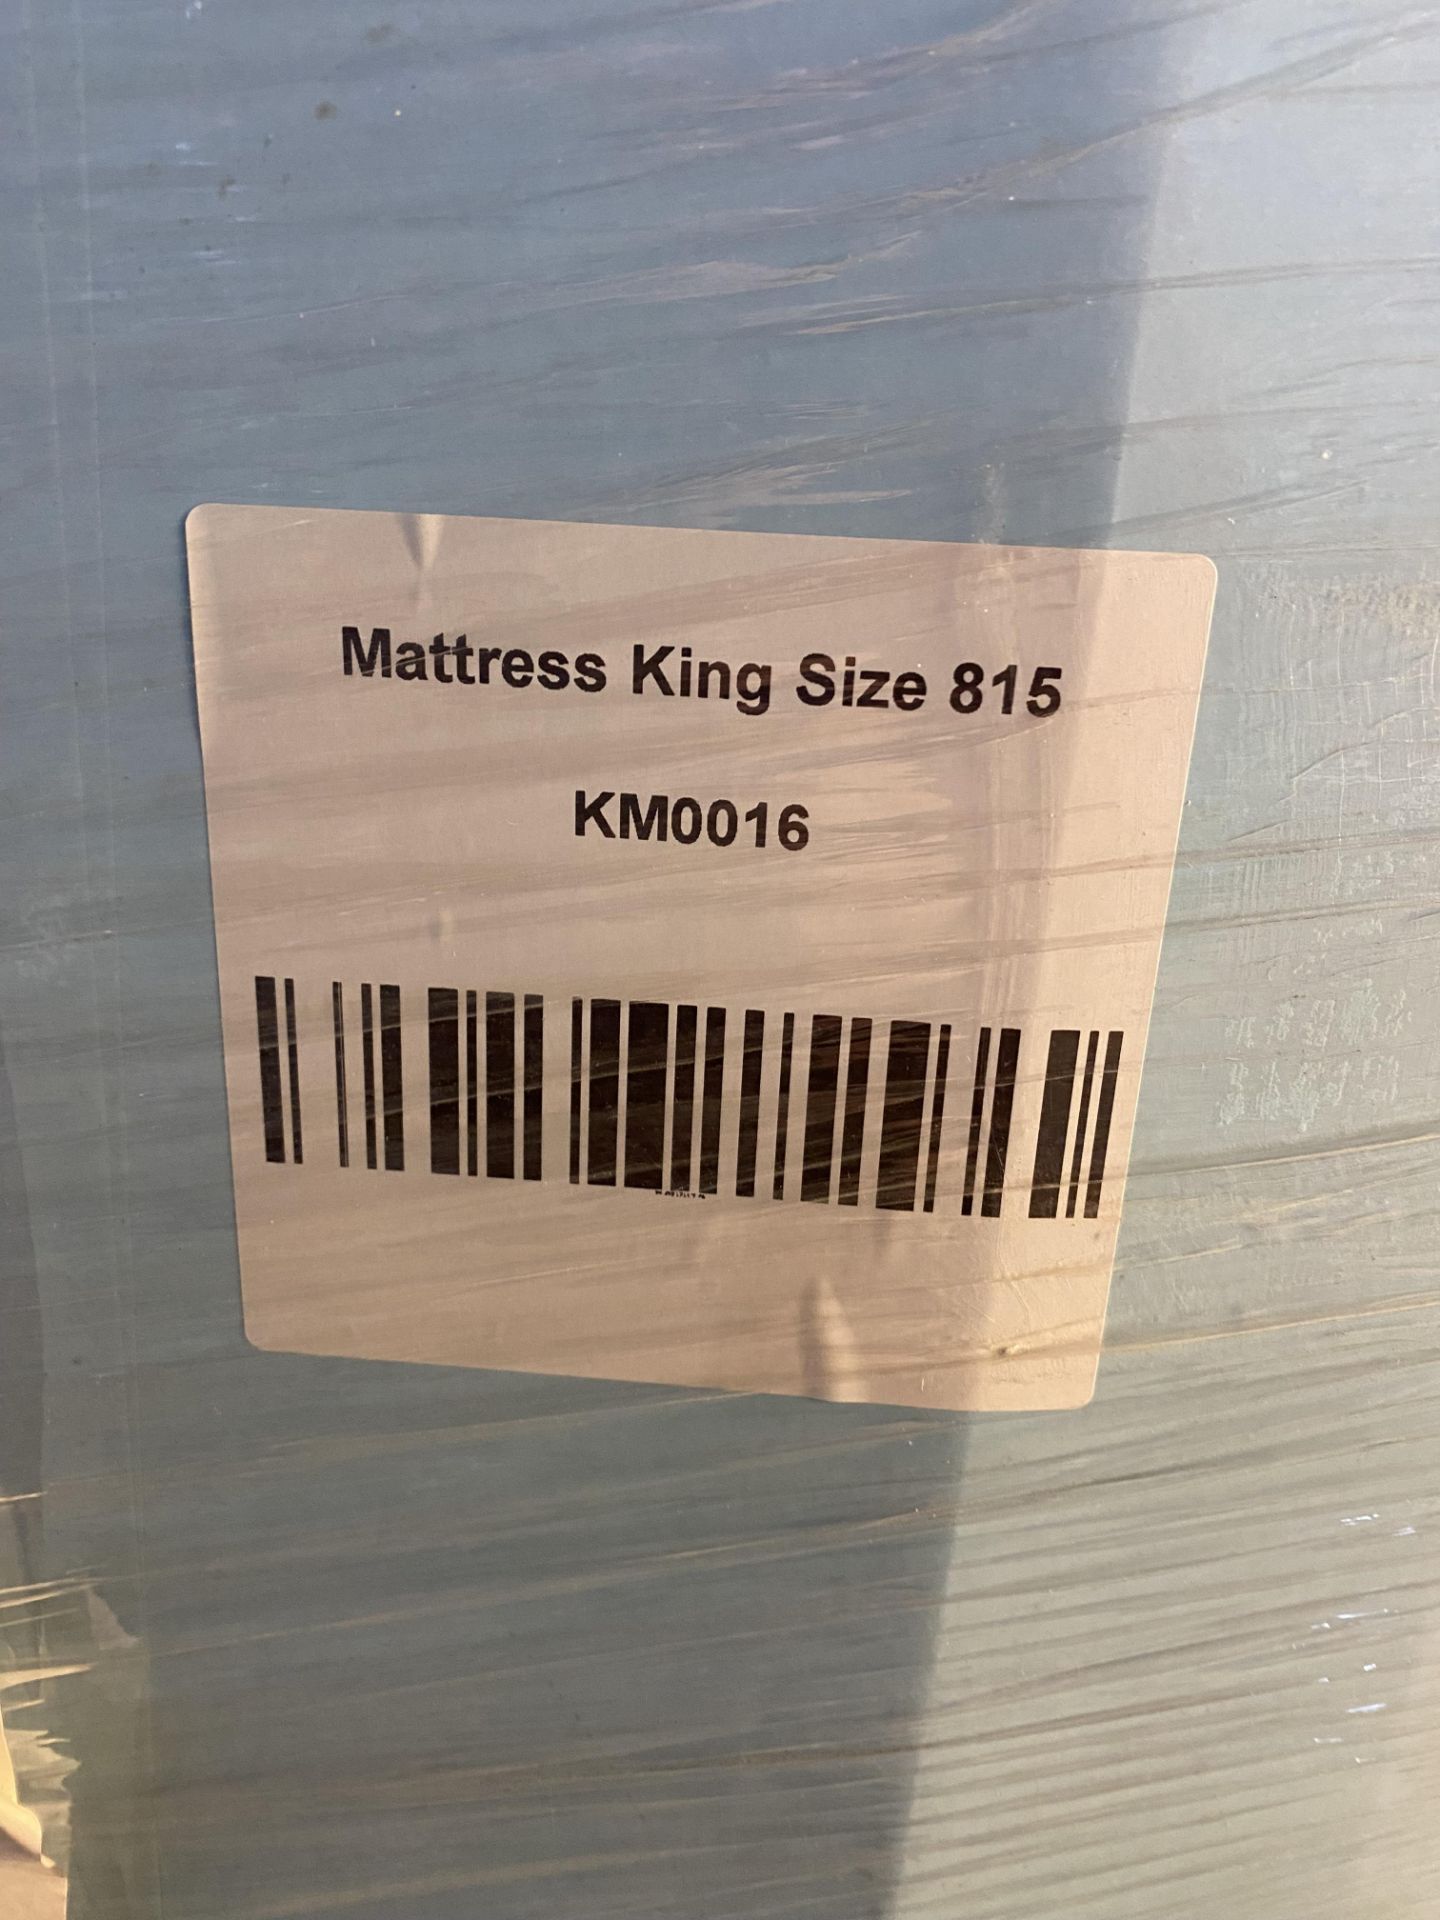 ComfaSleep KM0014 King Size 816 Mattress - Image 6 of 6